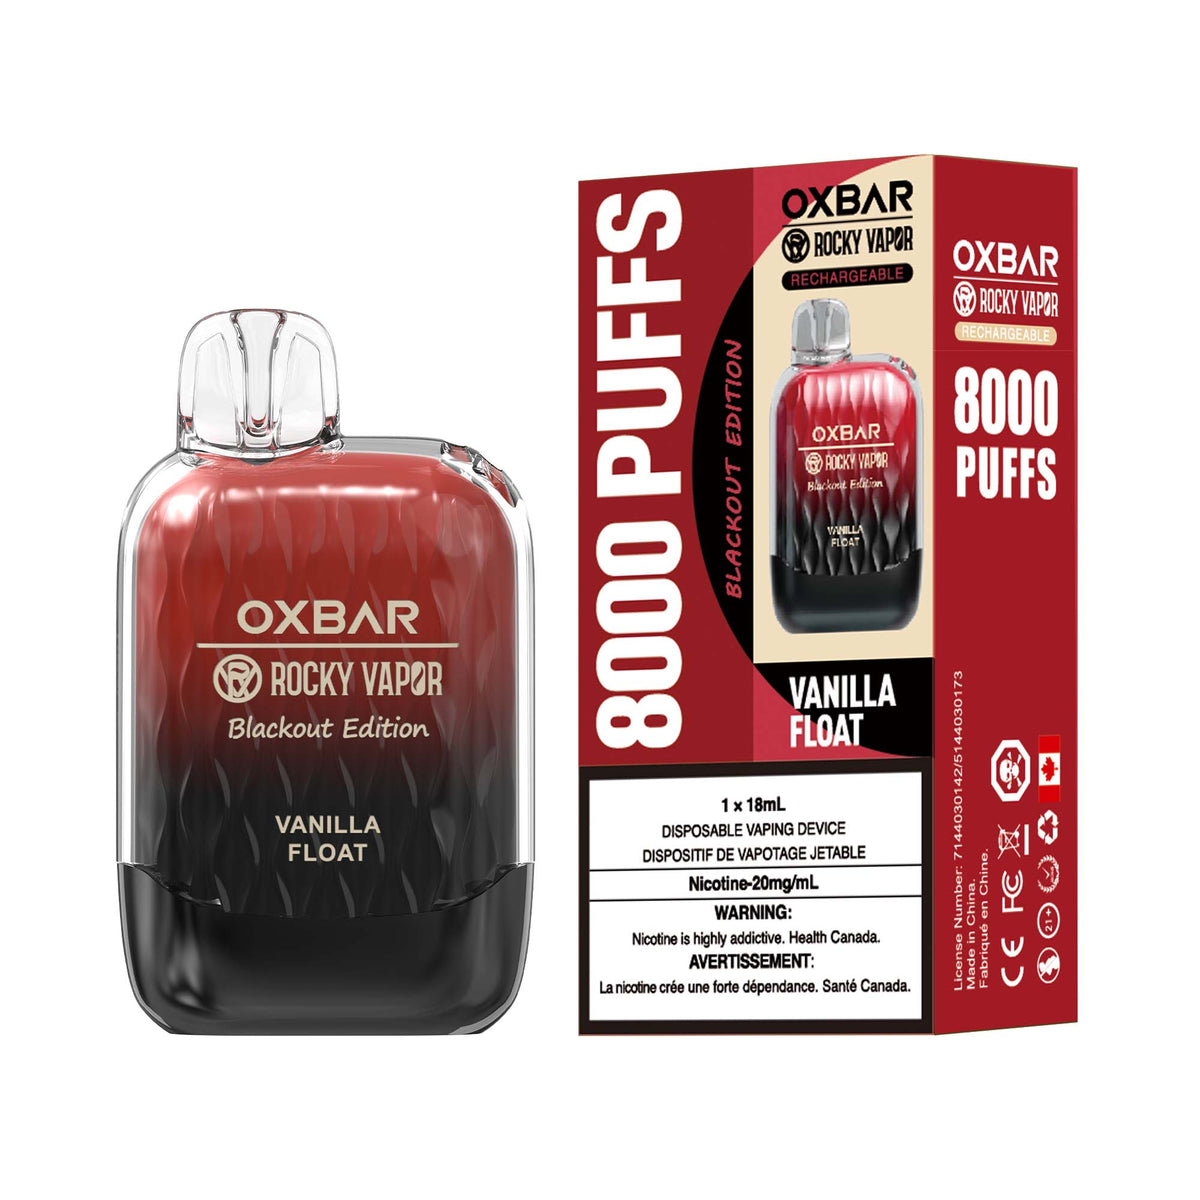 OXBAR x Rocky Vapor G8000 - Vanilla Float Disposable Vape available on Canada online vape shop